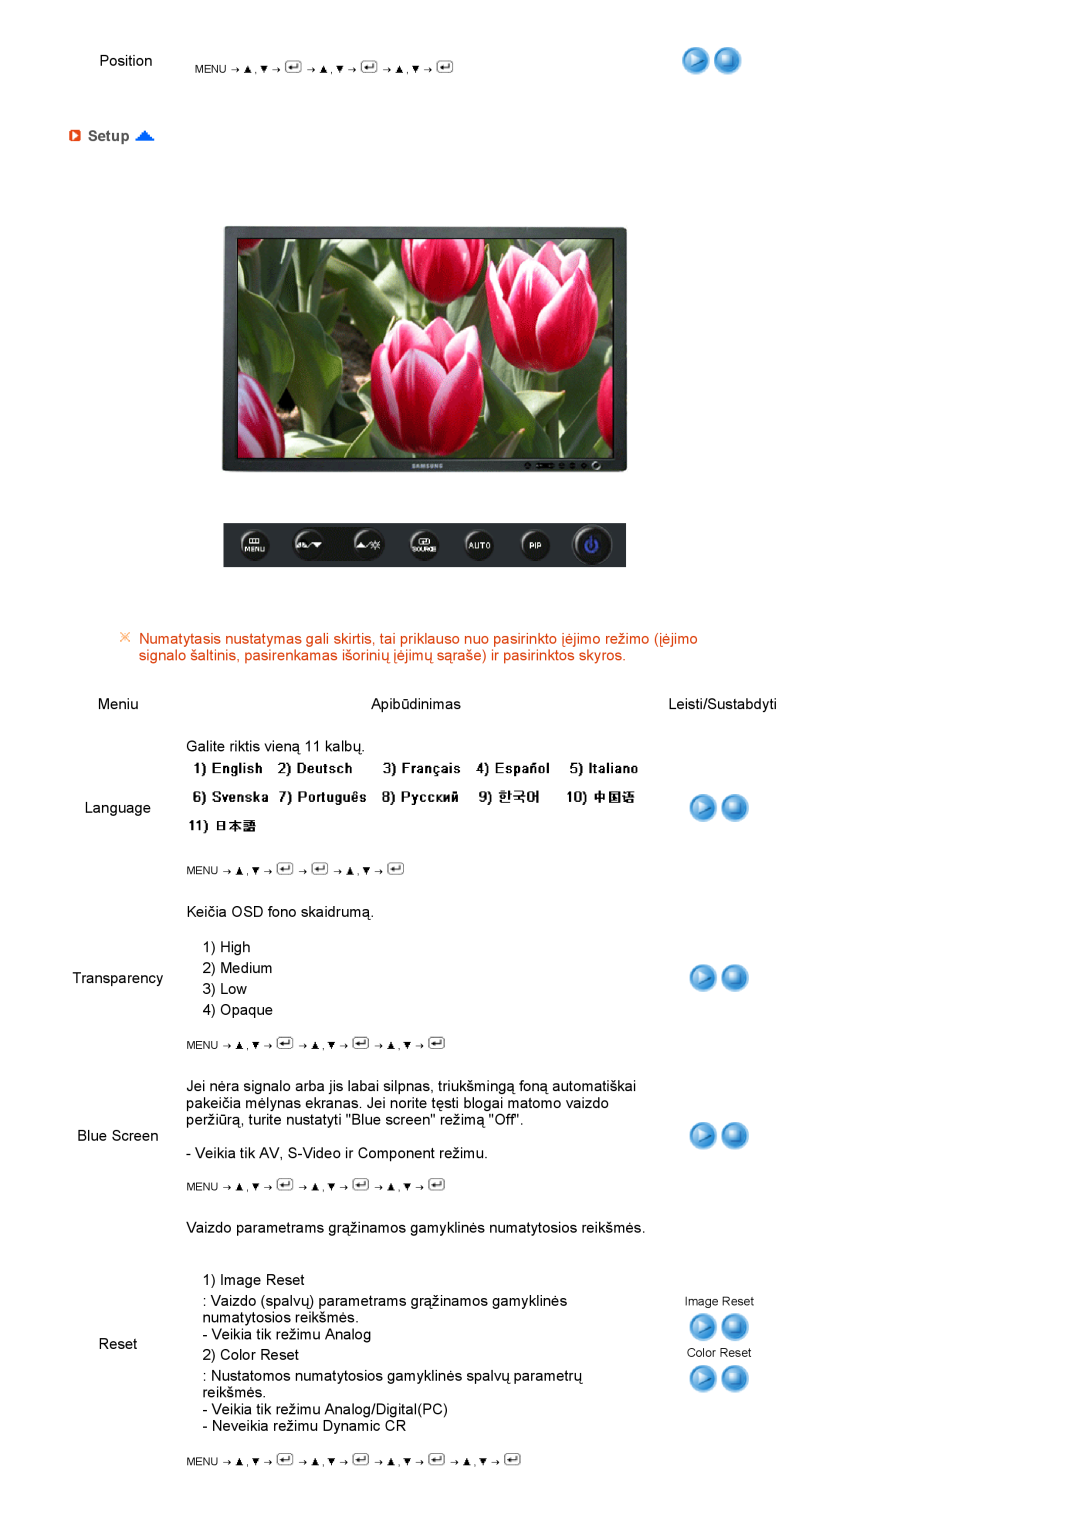 Samsung LS27HUBCB/EDC manual Setup, Image Reset Color Reset 